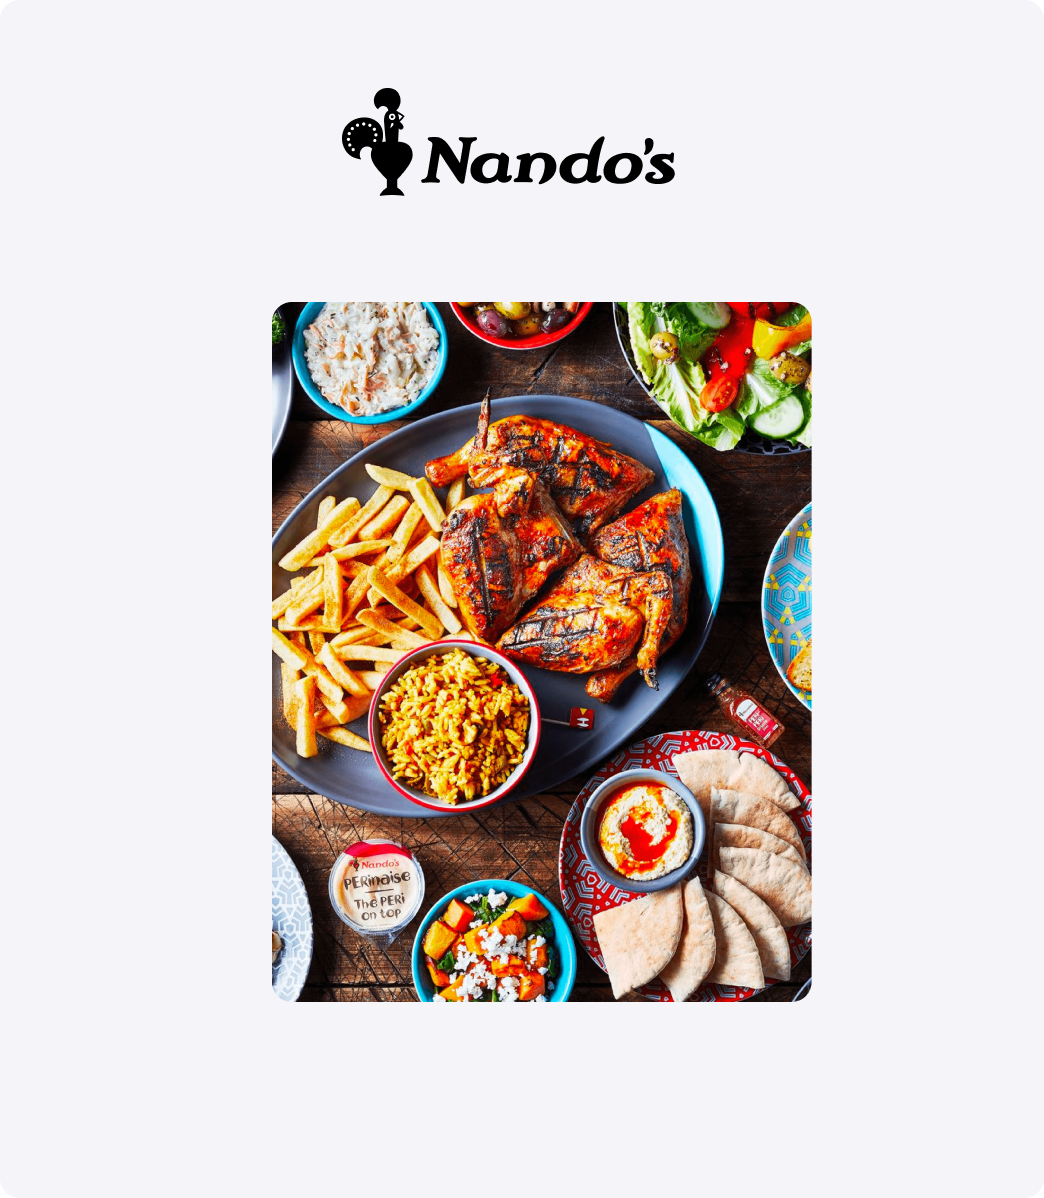 Nandos branding